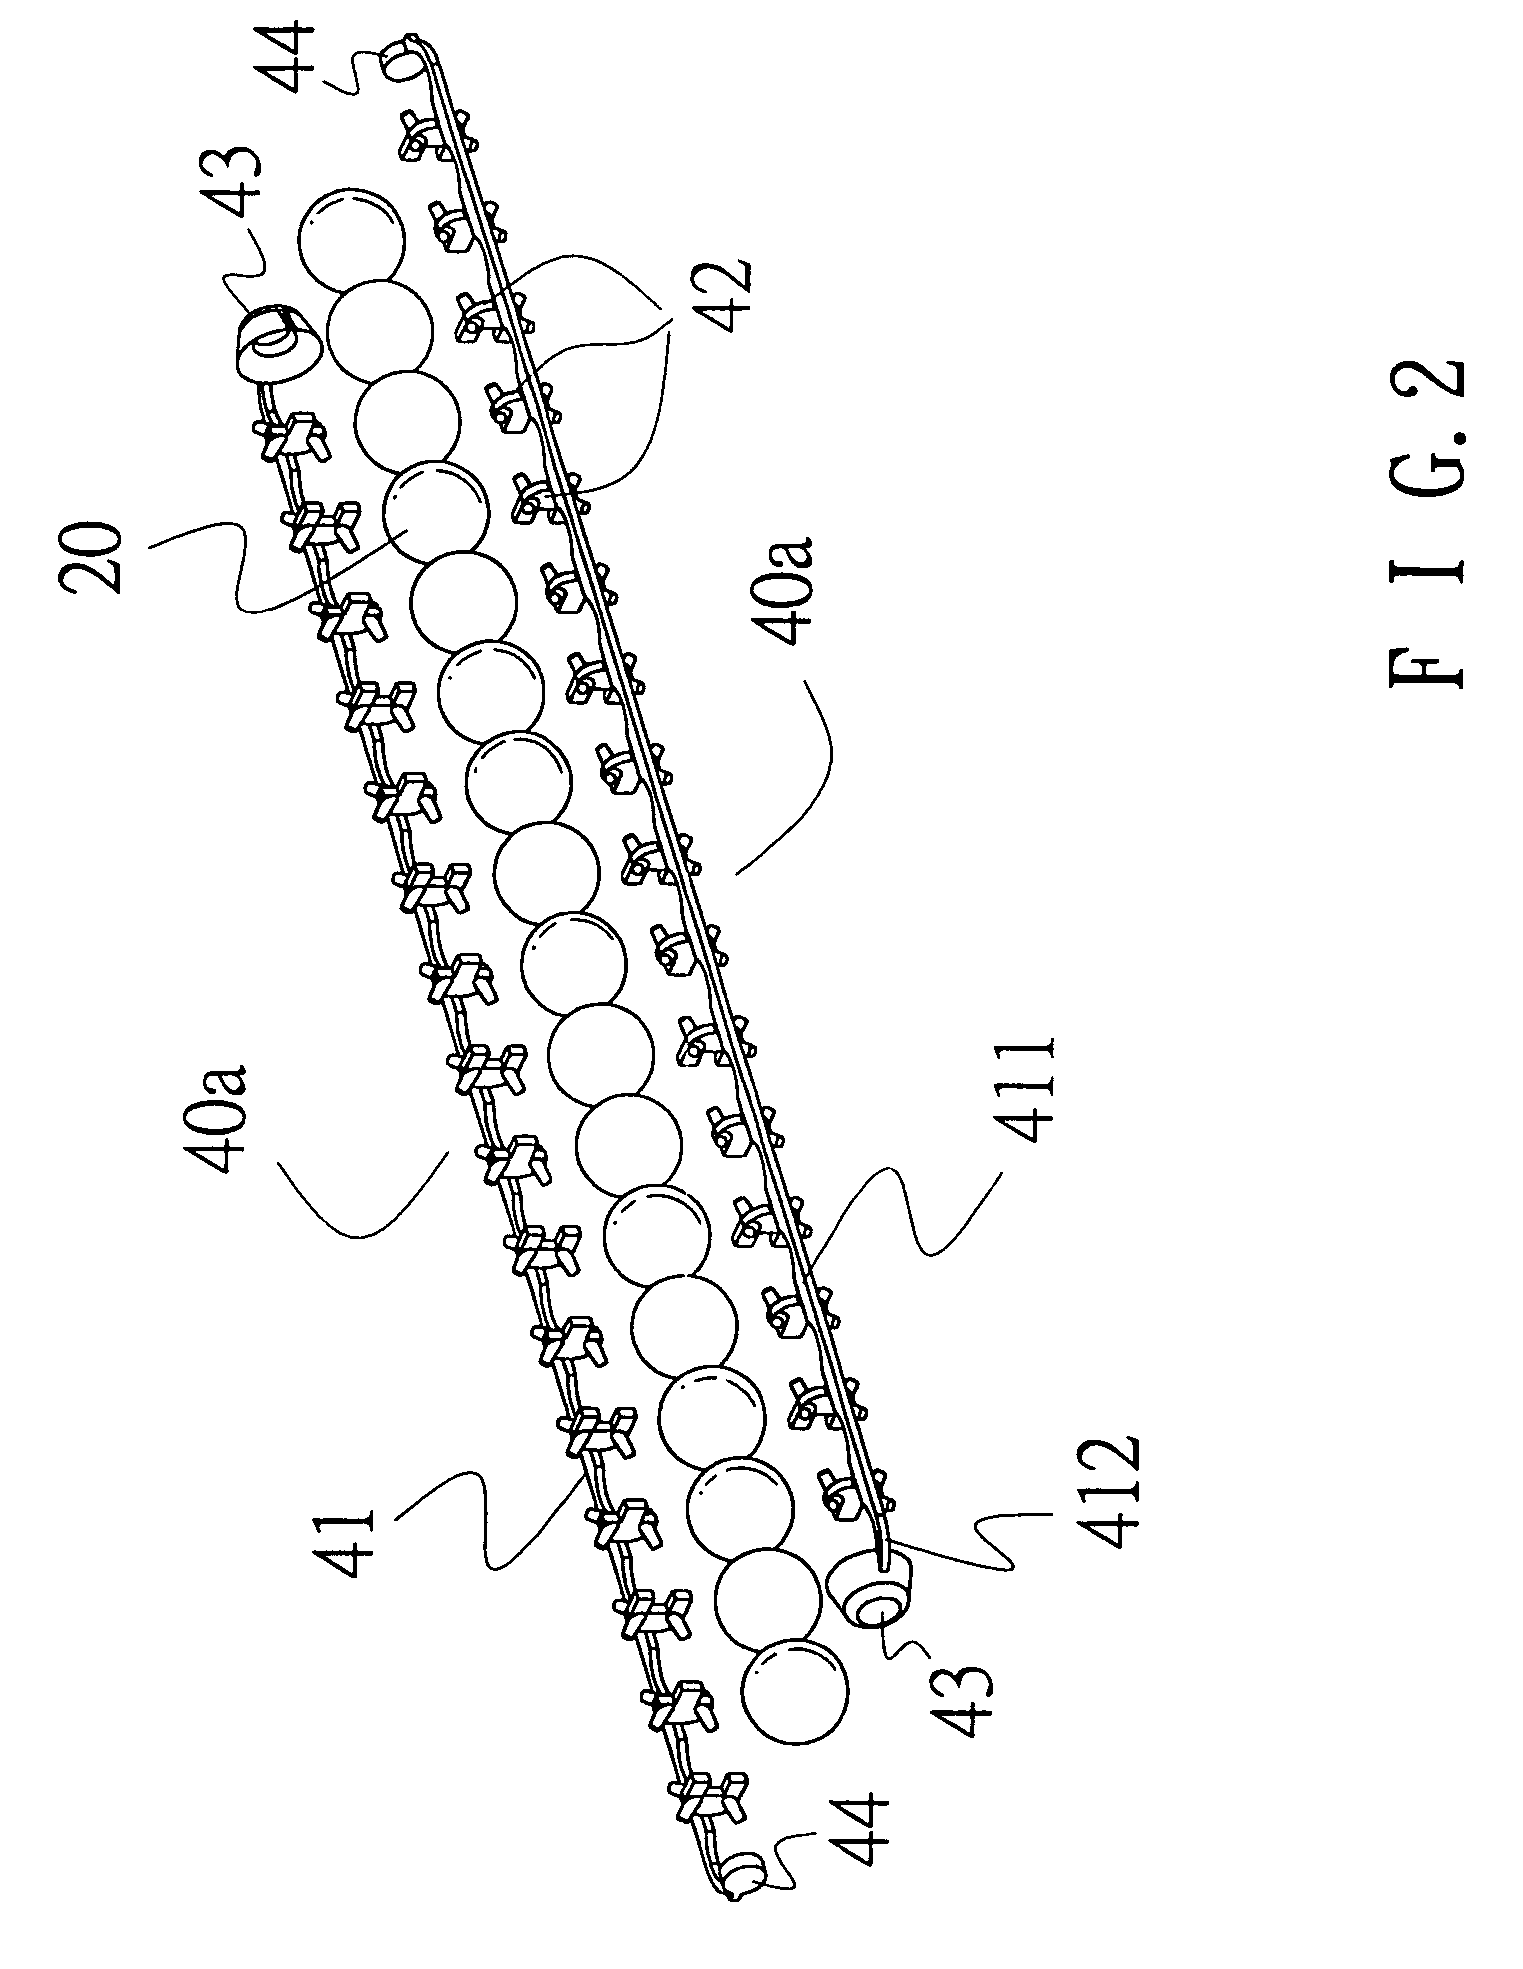 Clip-chain module of rolling unit